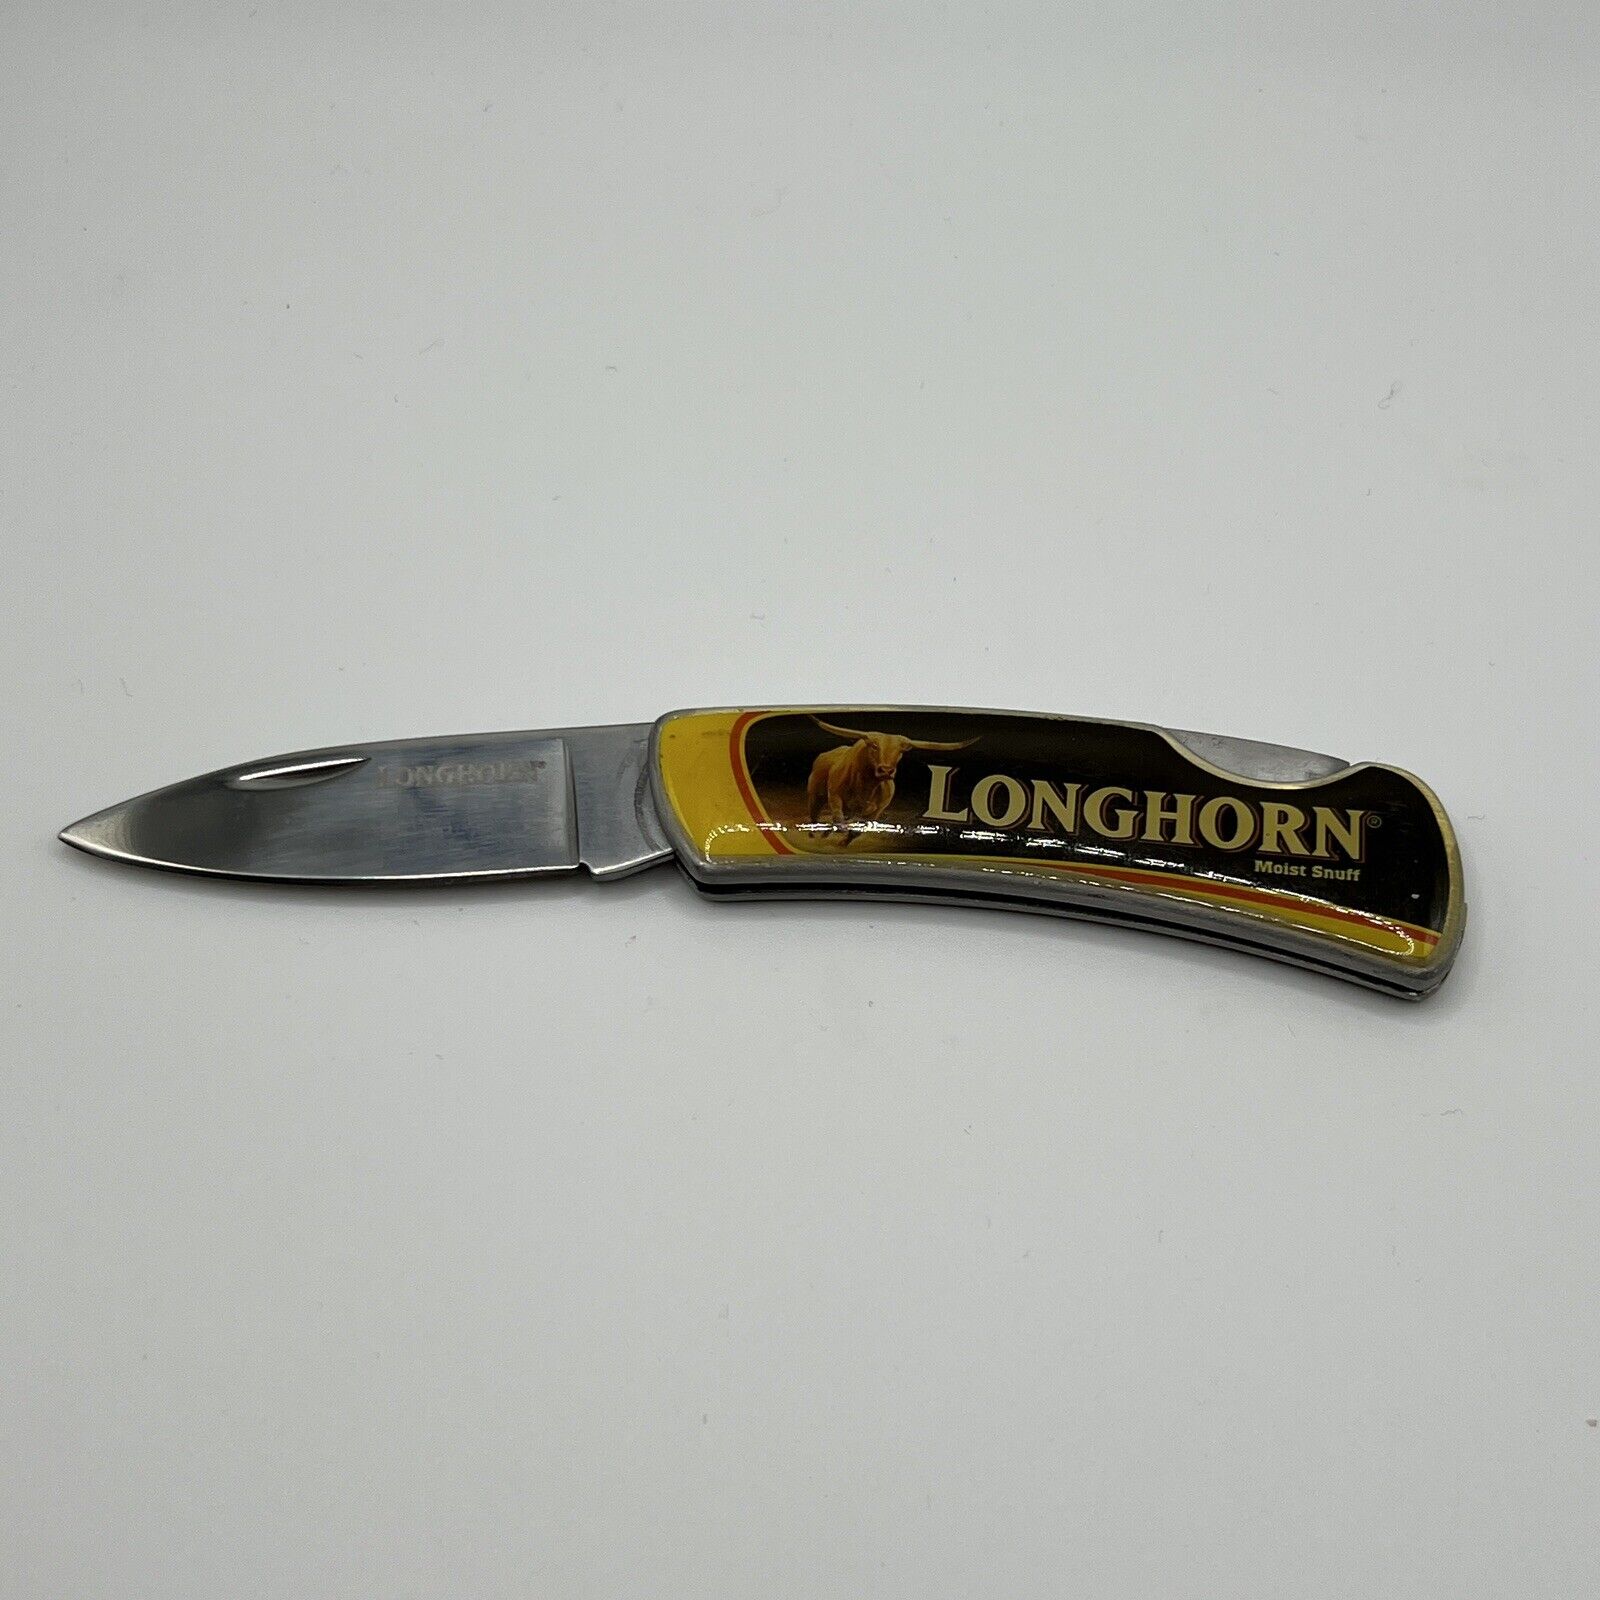 Vintage Longhorn Moist Snuff Advertising Knife